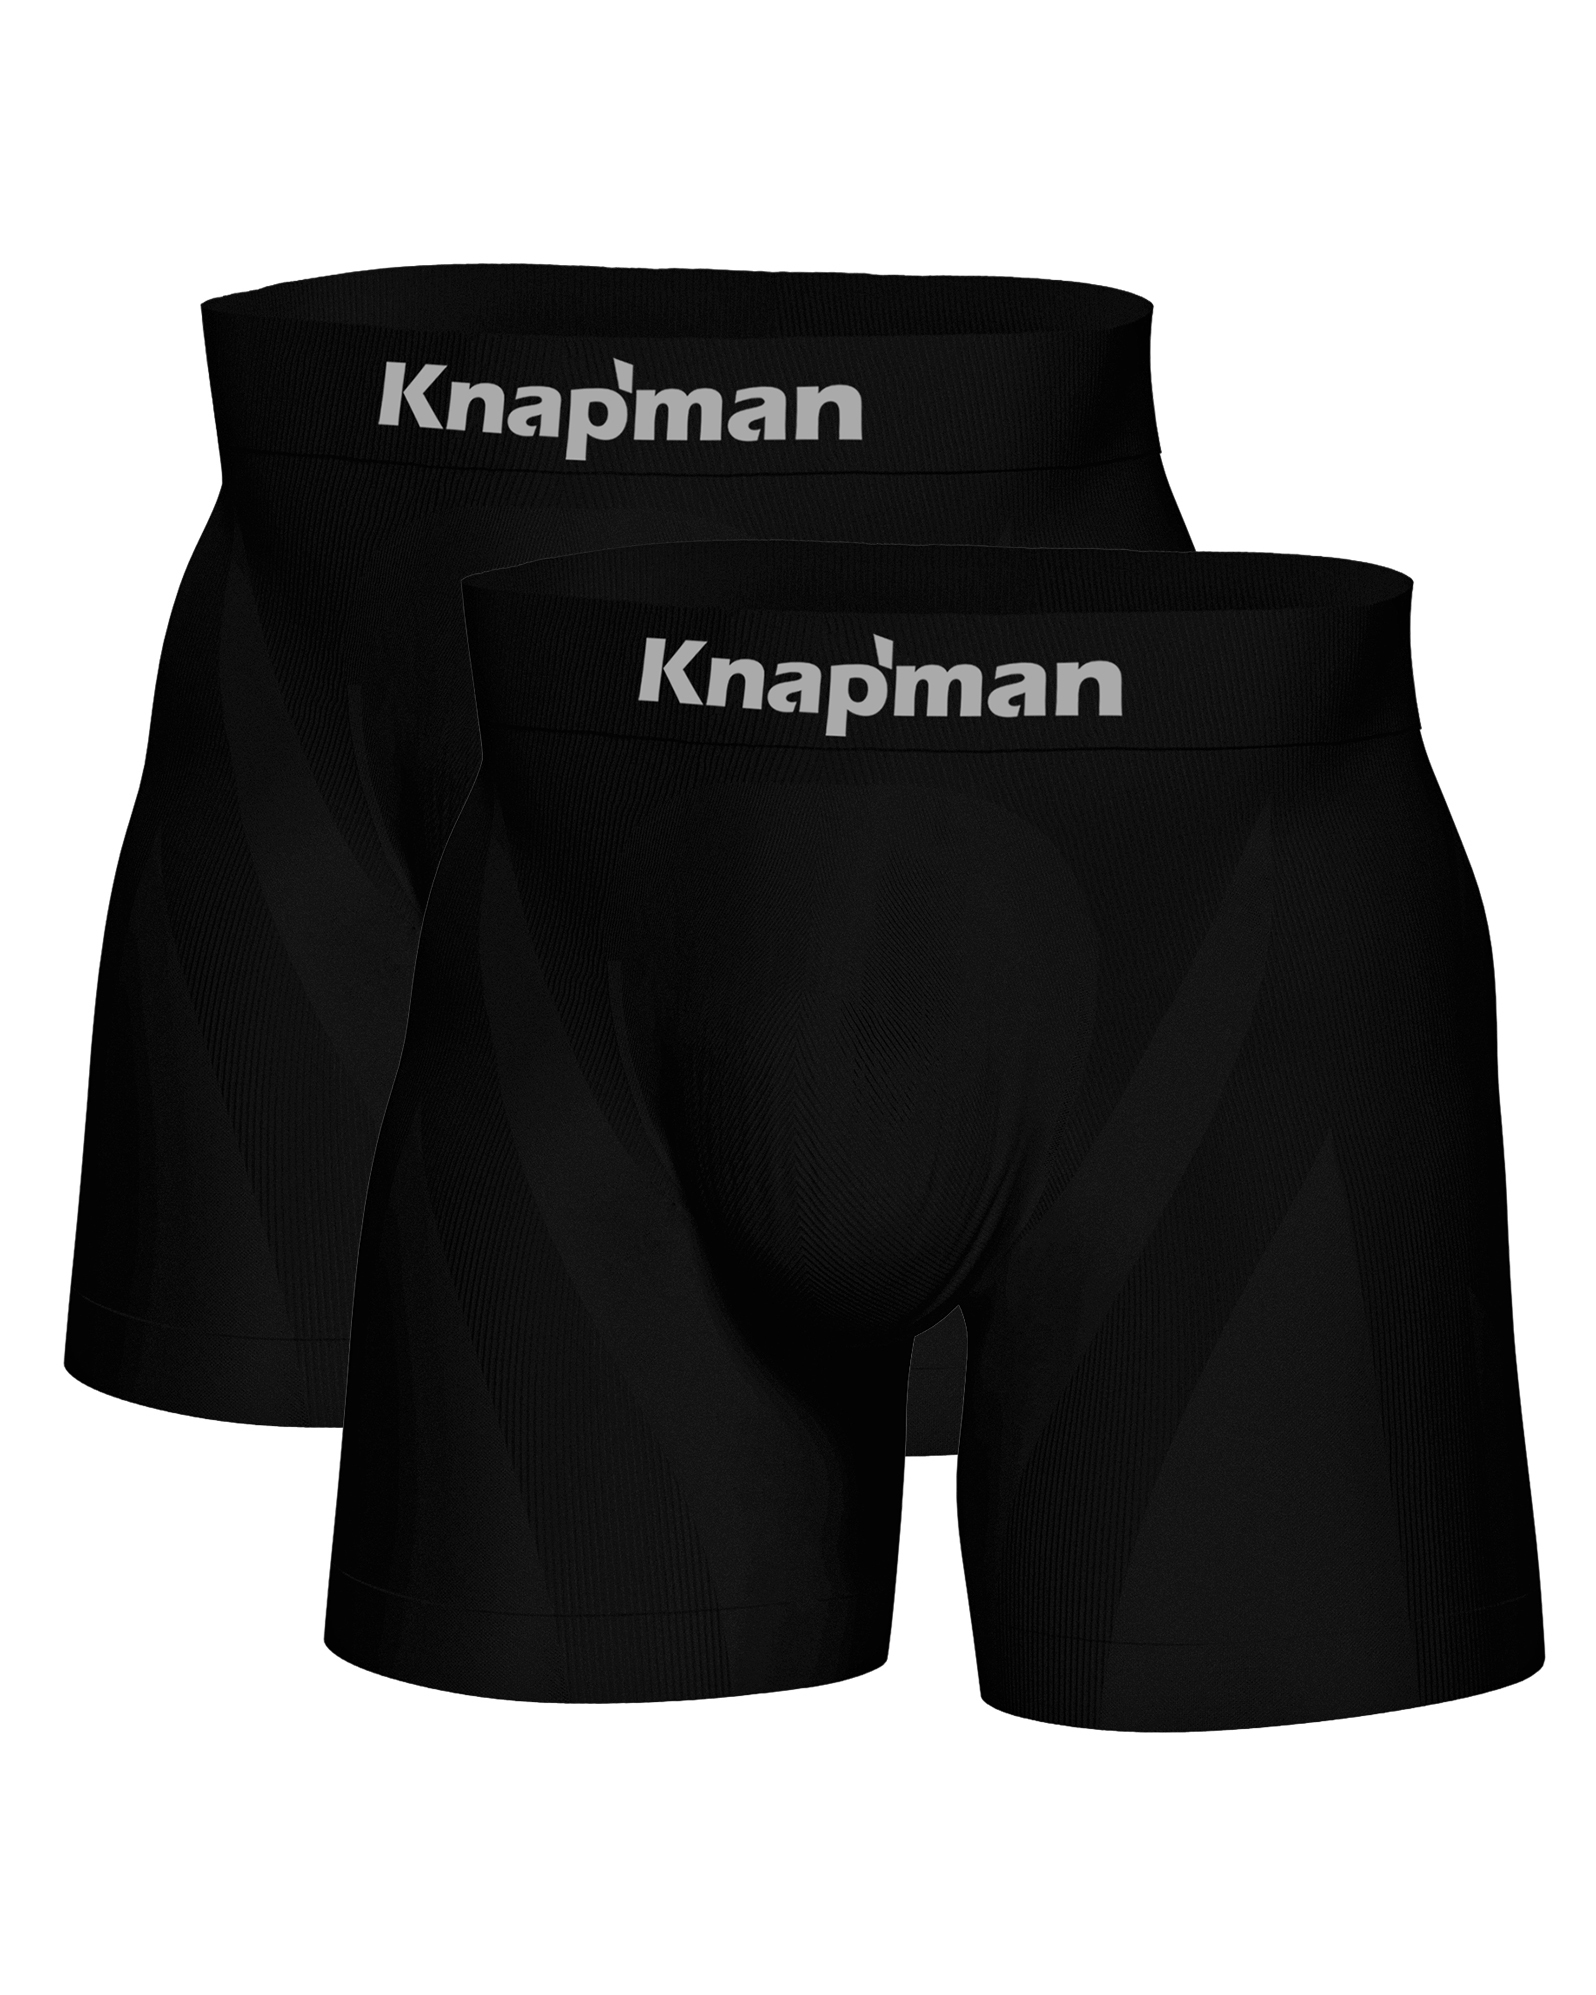 Knapman Ultimate Comfort Boxer Shorts | Twopack